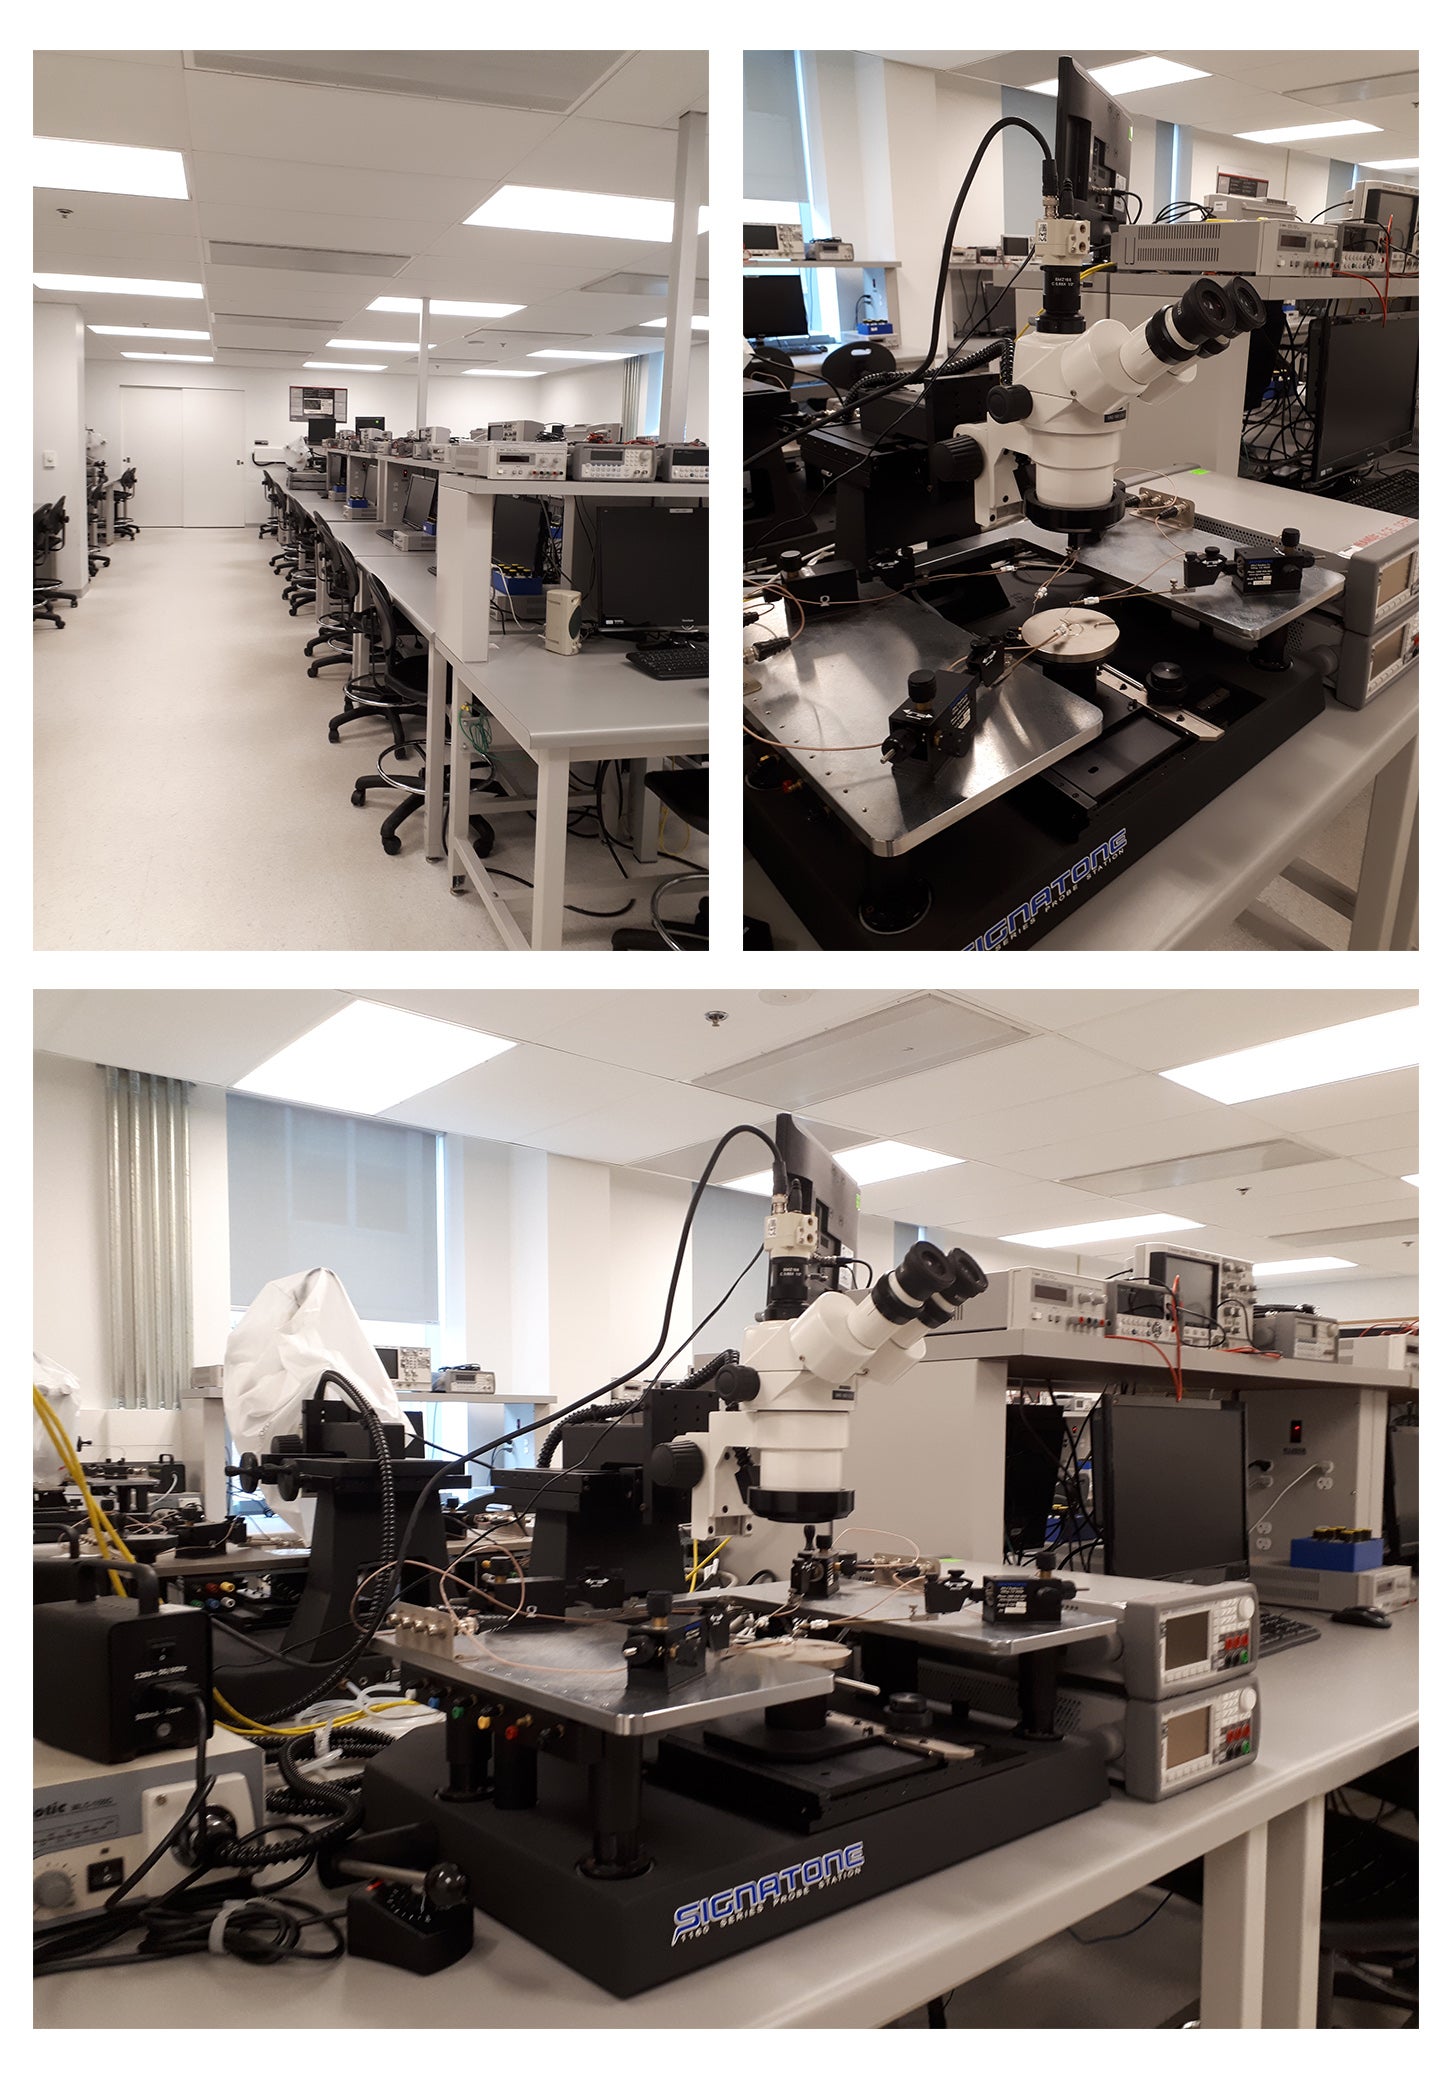 Microscope facilities